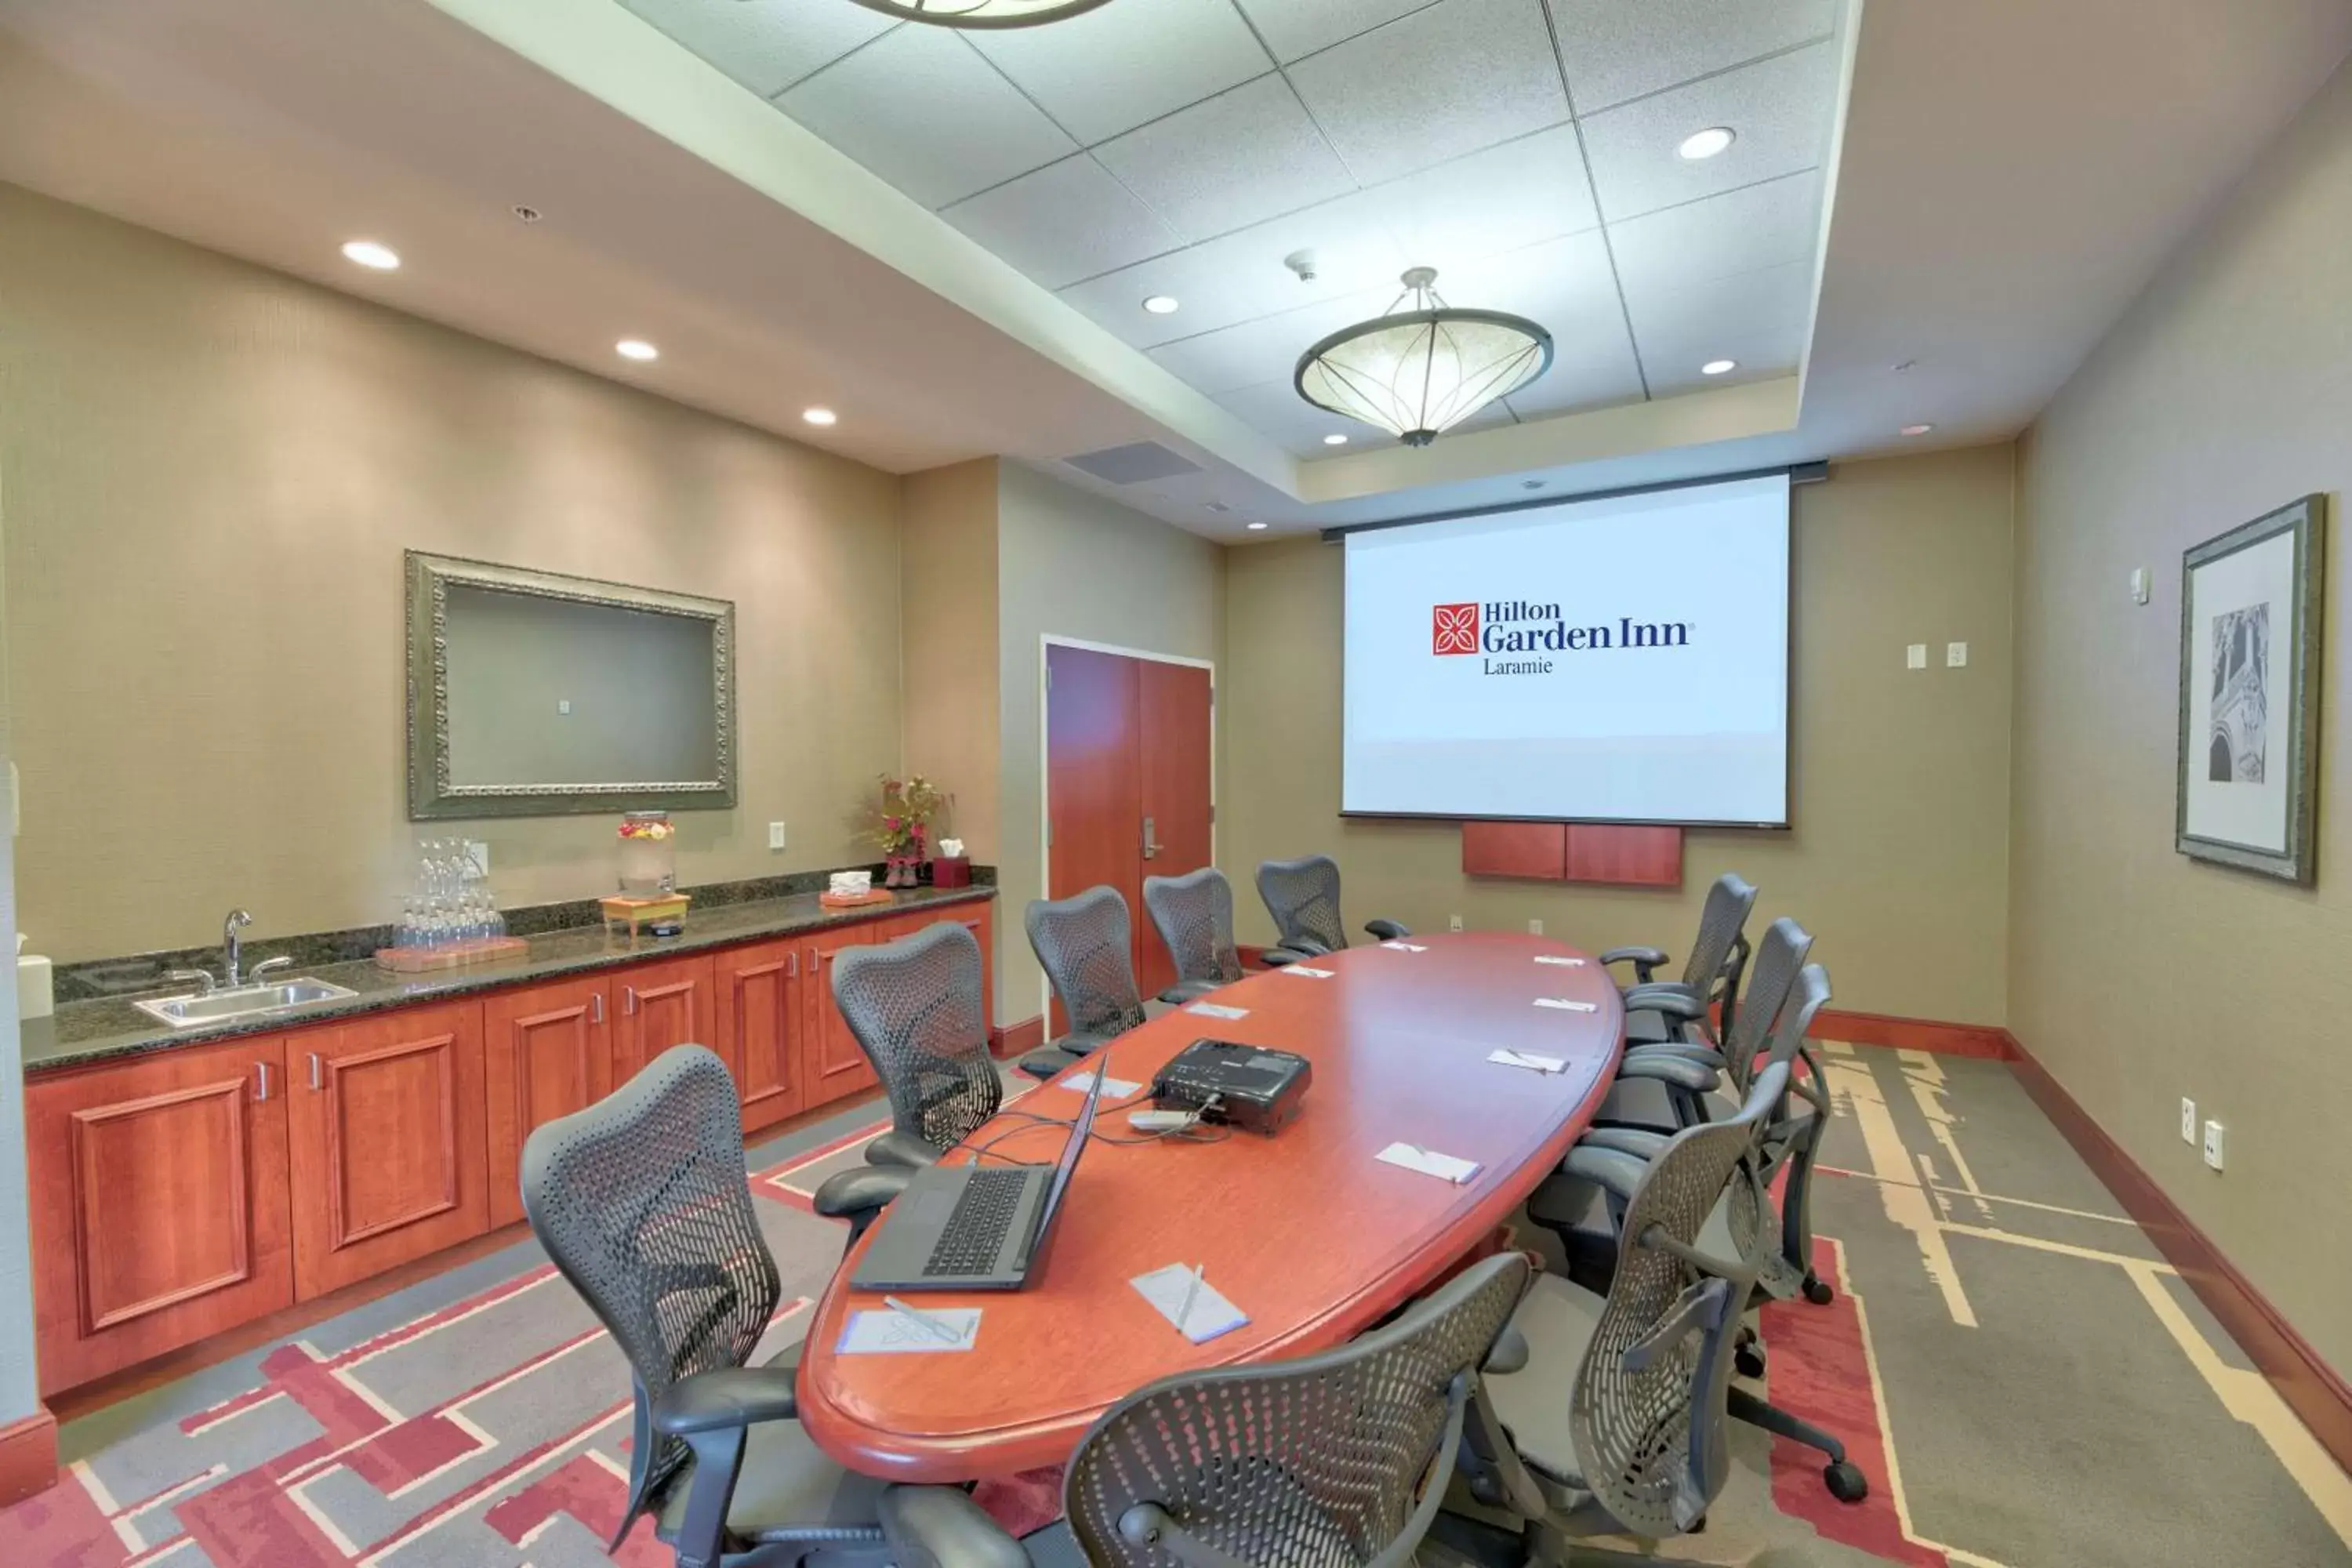 Meeting/conference room in Hilton Garden Inn Laramie